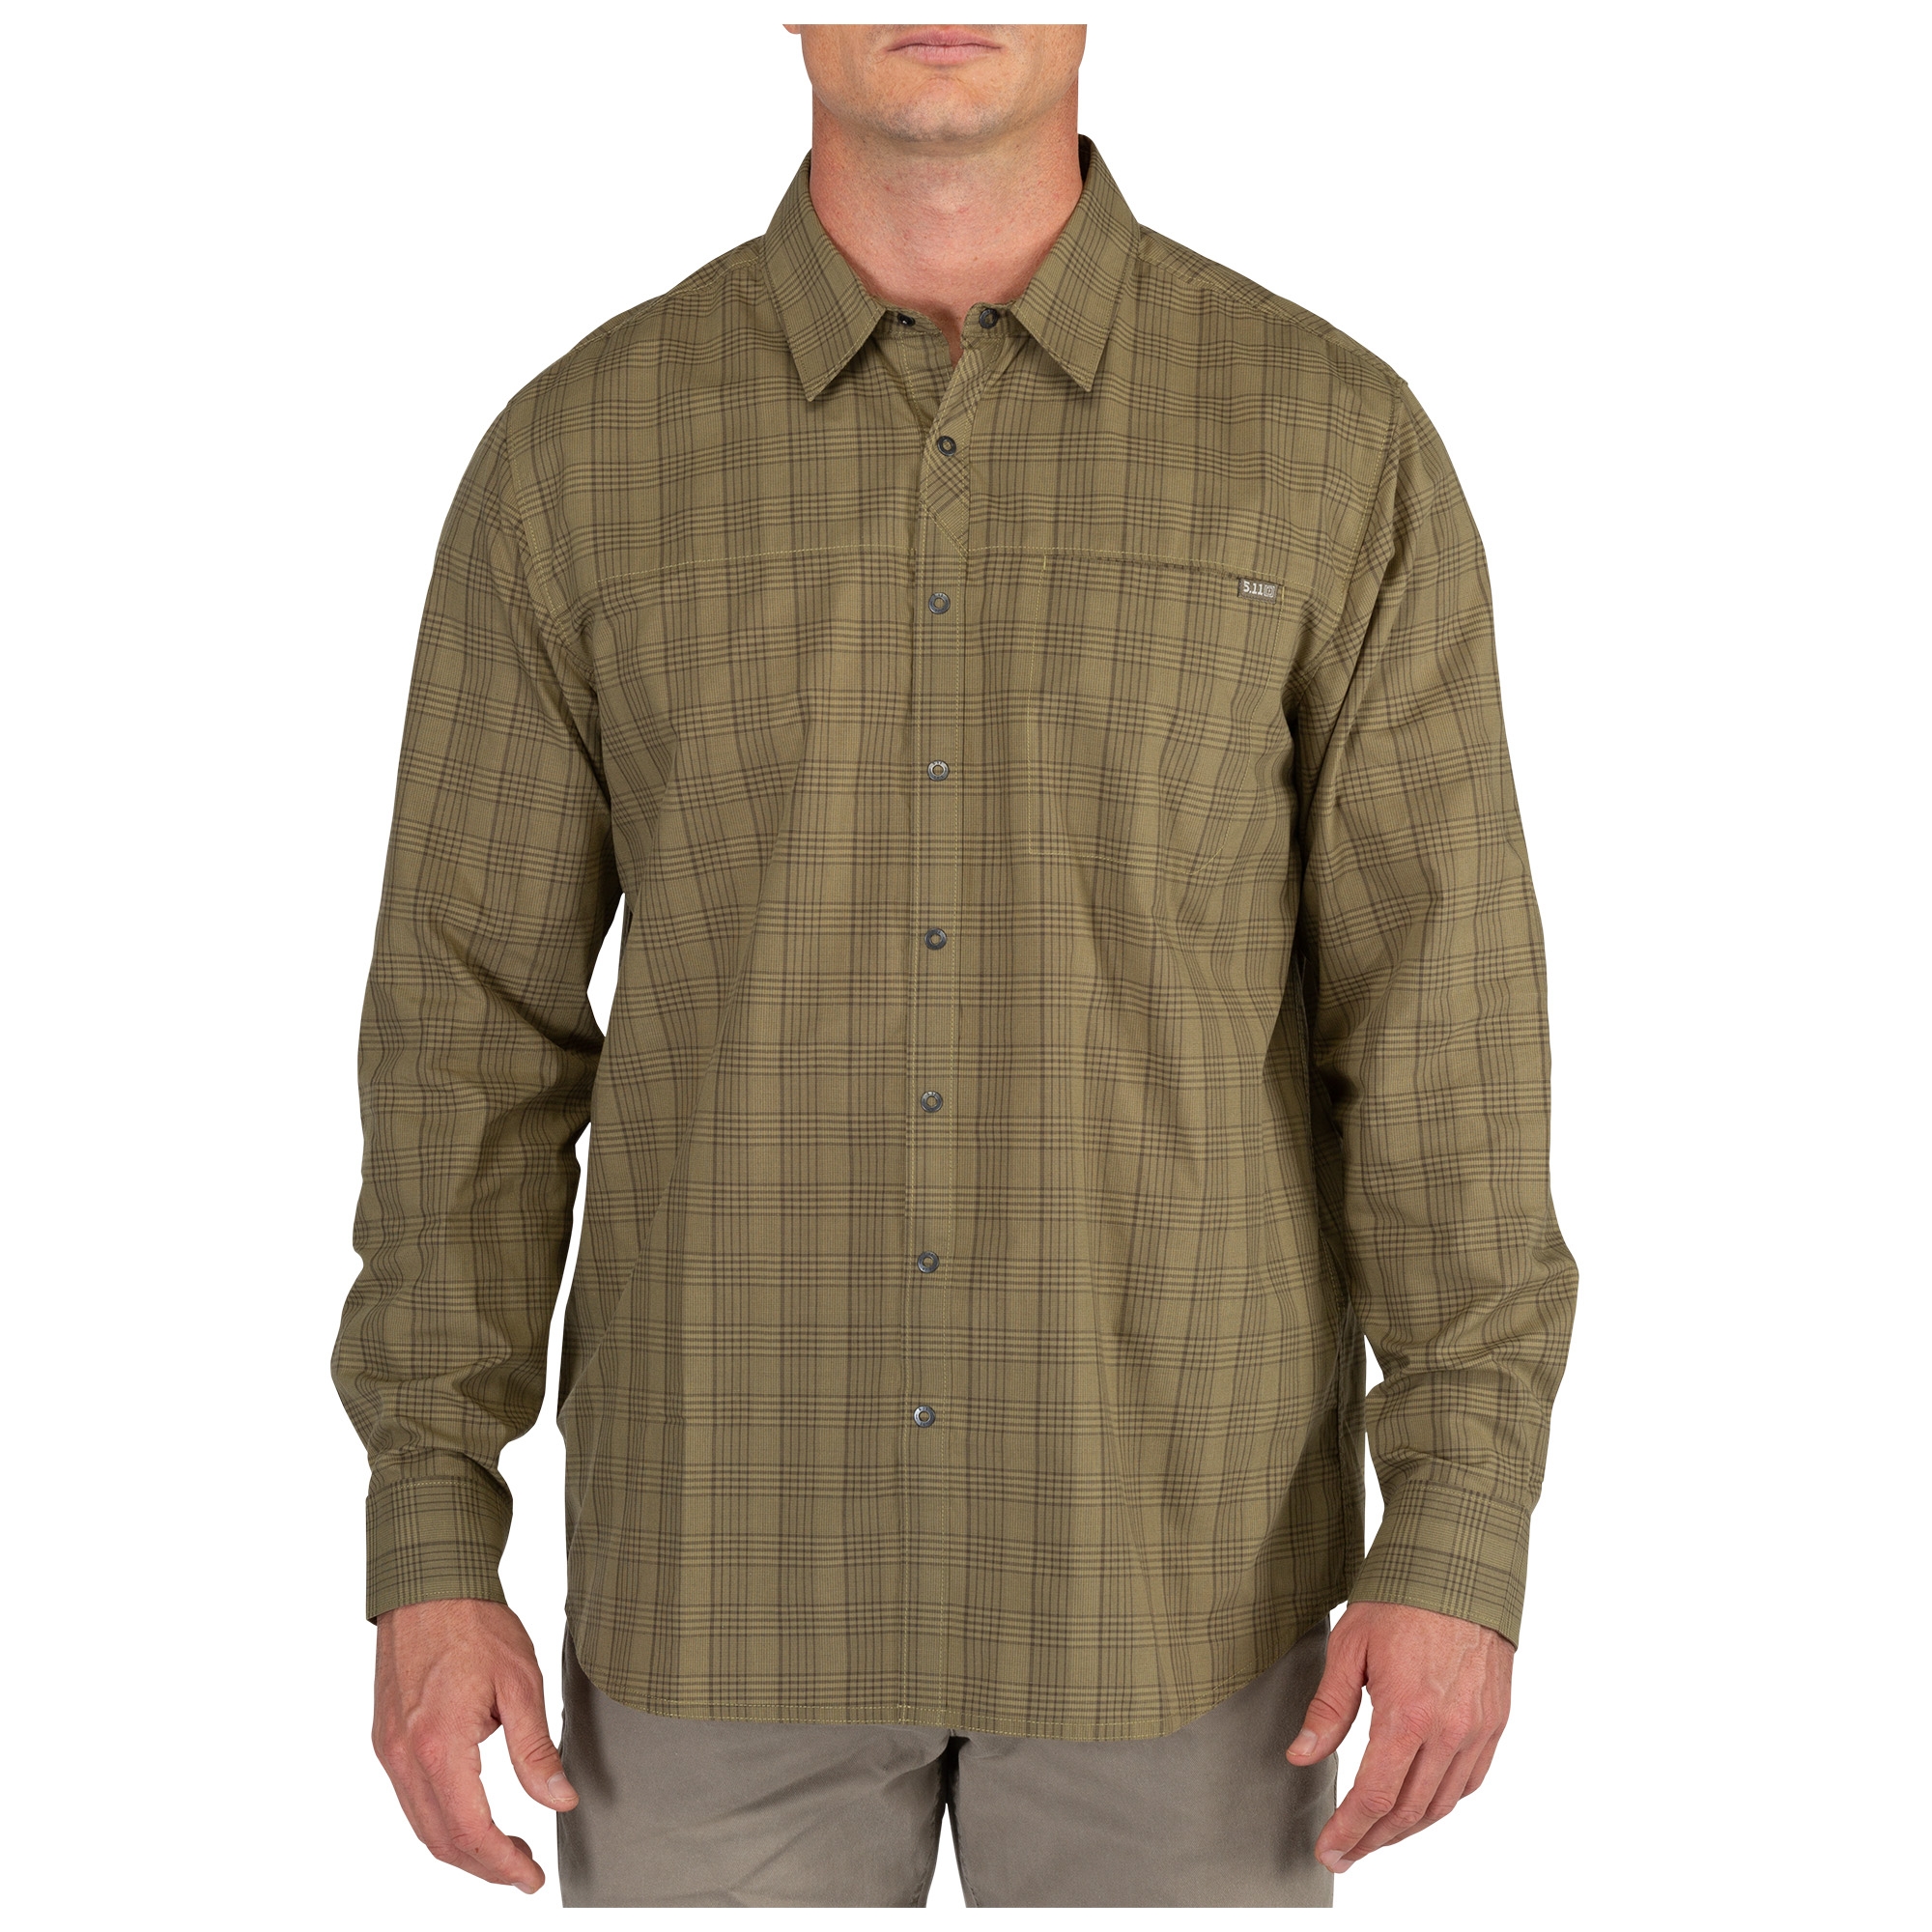 5.11 Tactical Men's Legend Long Sleeve Shirt (Turbulence), Size M